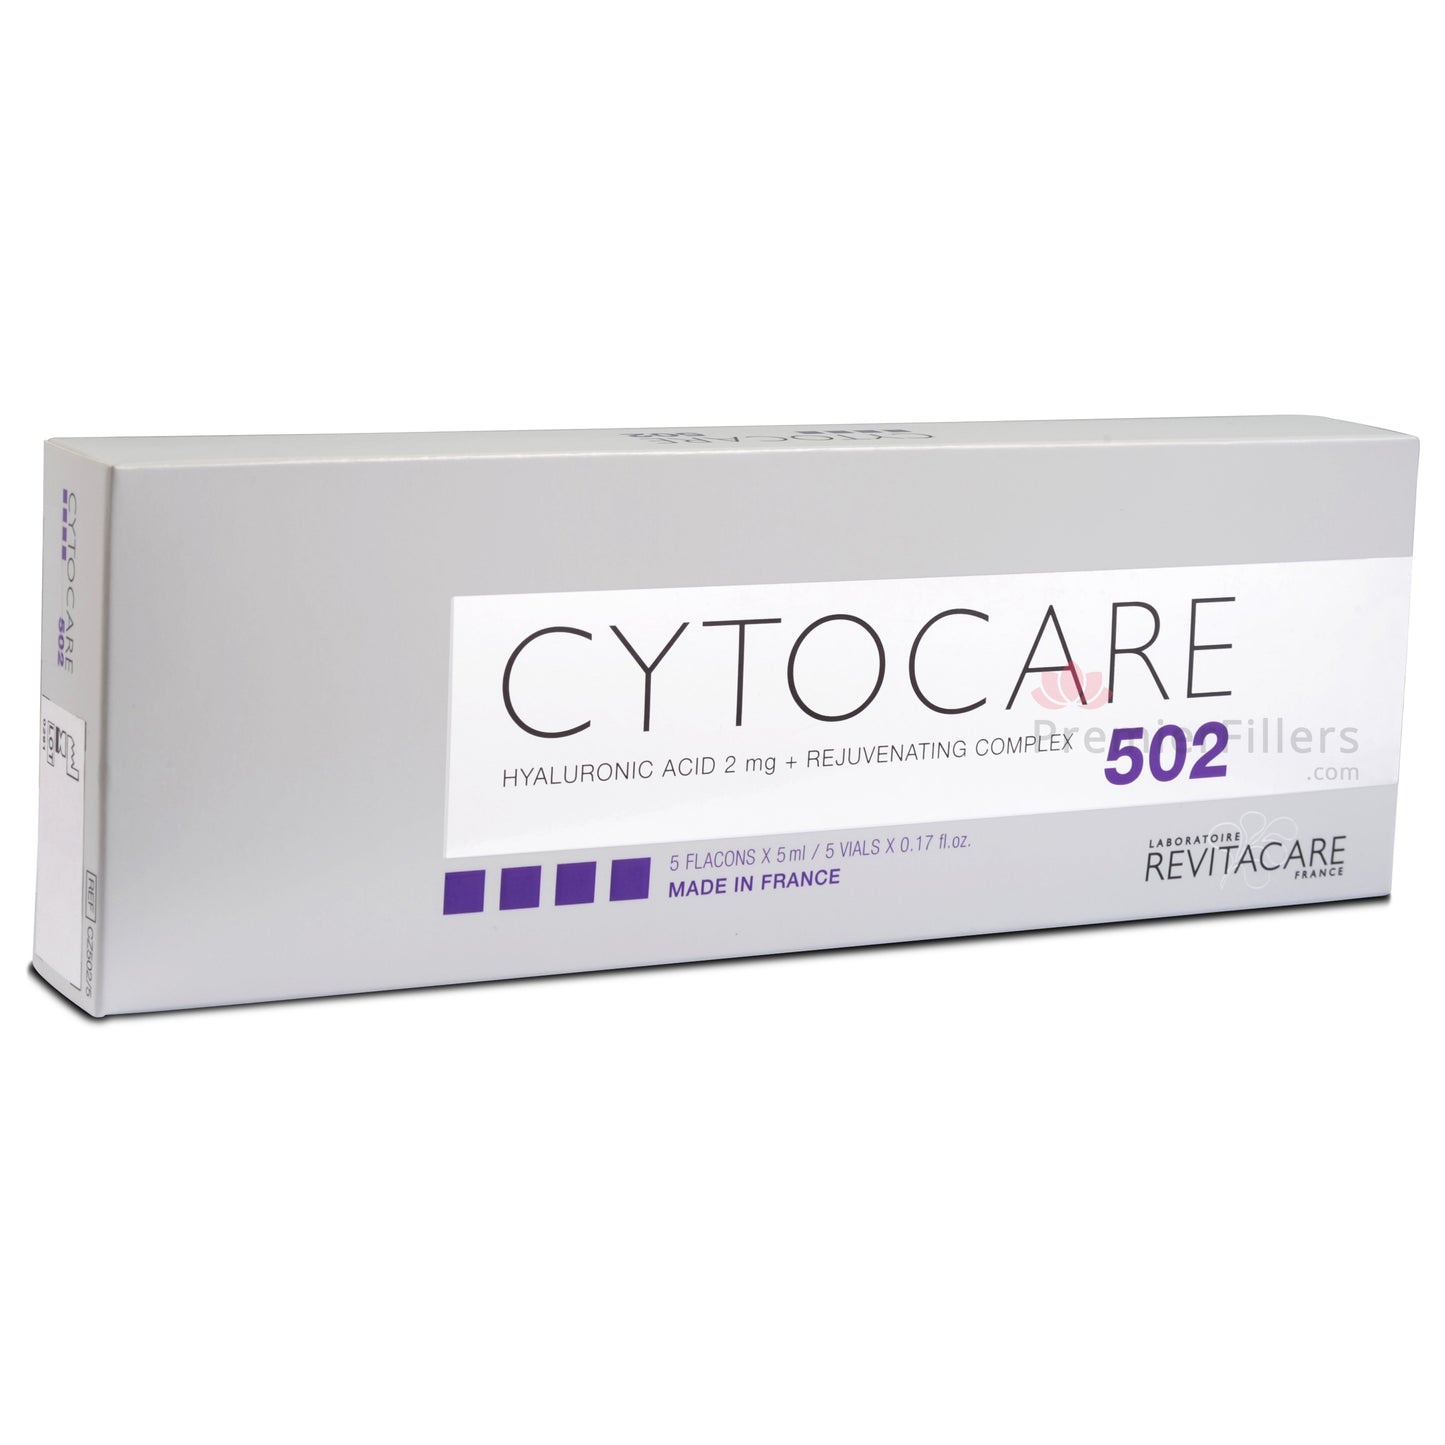 Cytocare 502 (5x5ml)